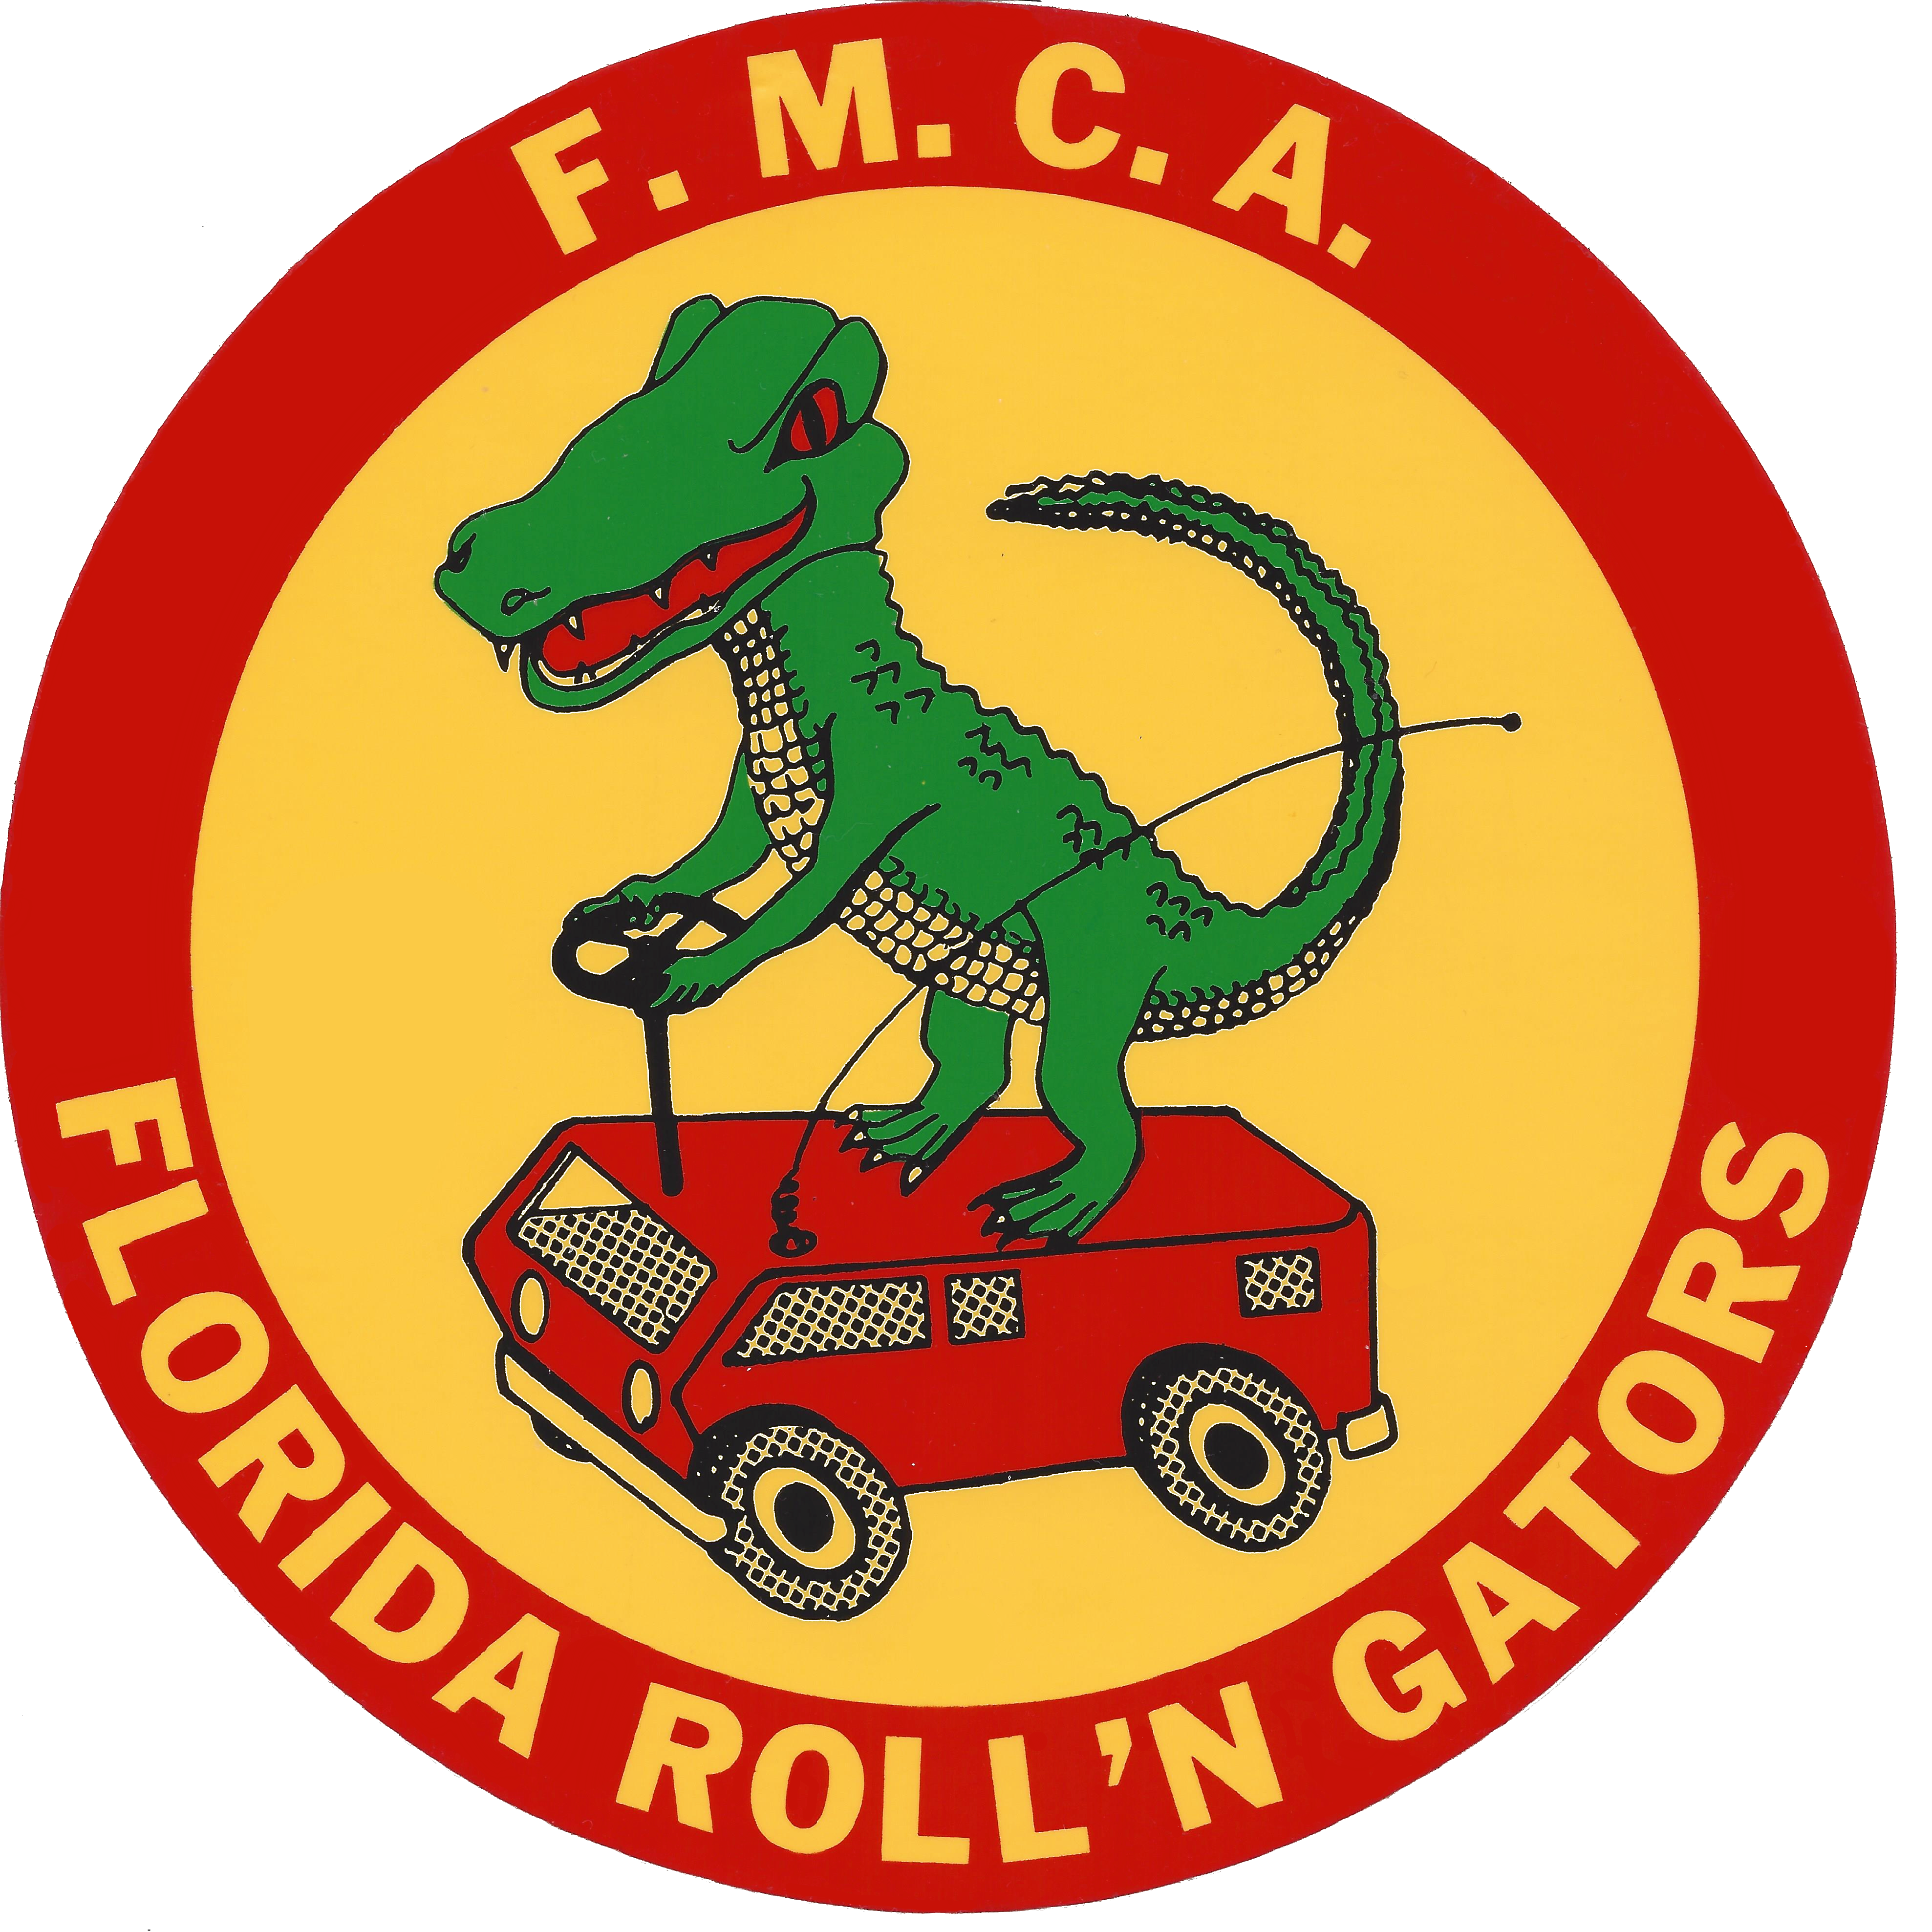 Florida Roll'n Gators